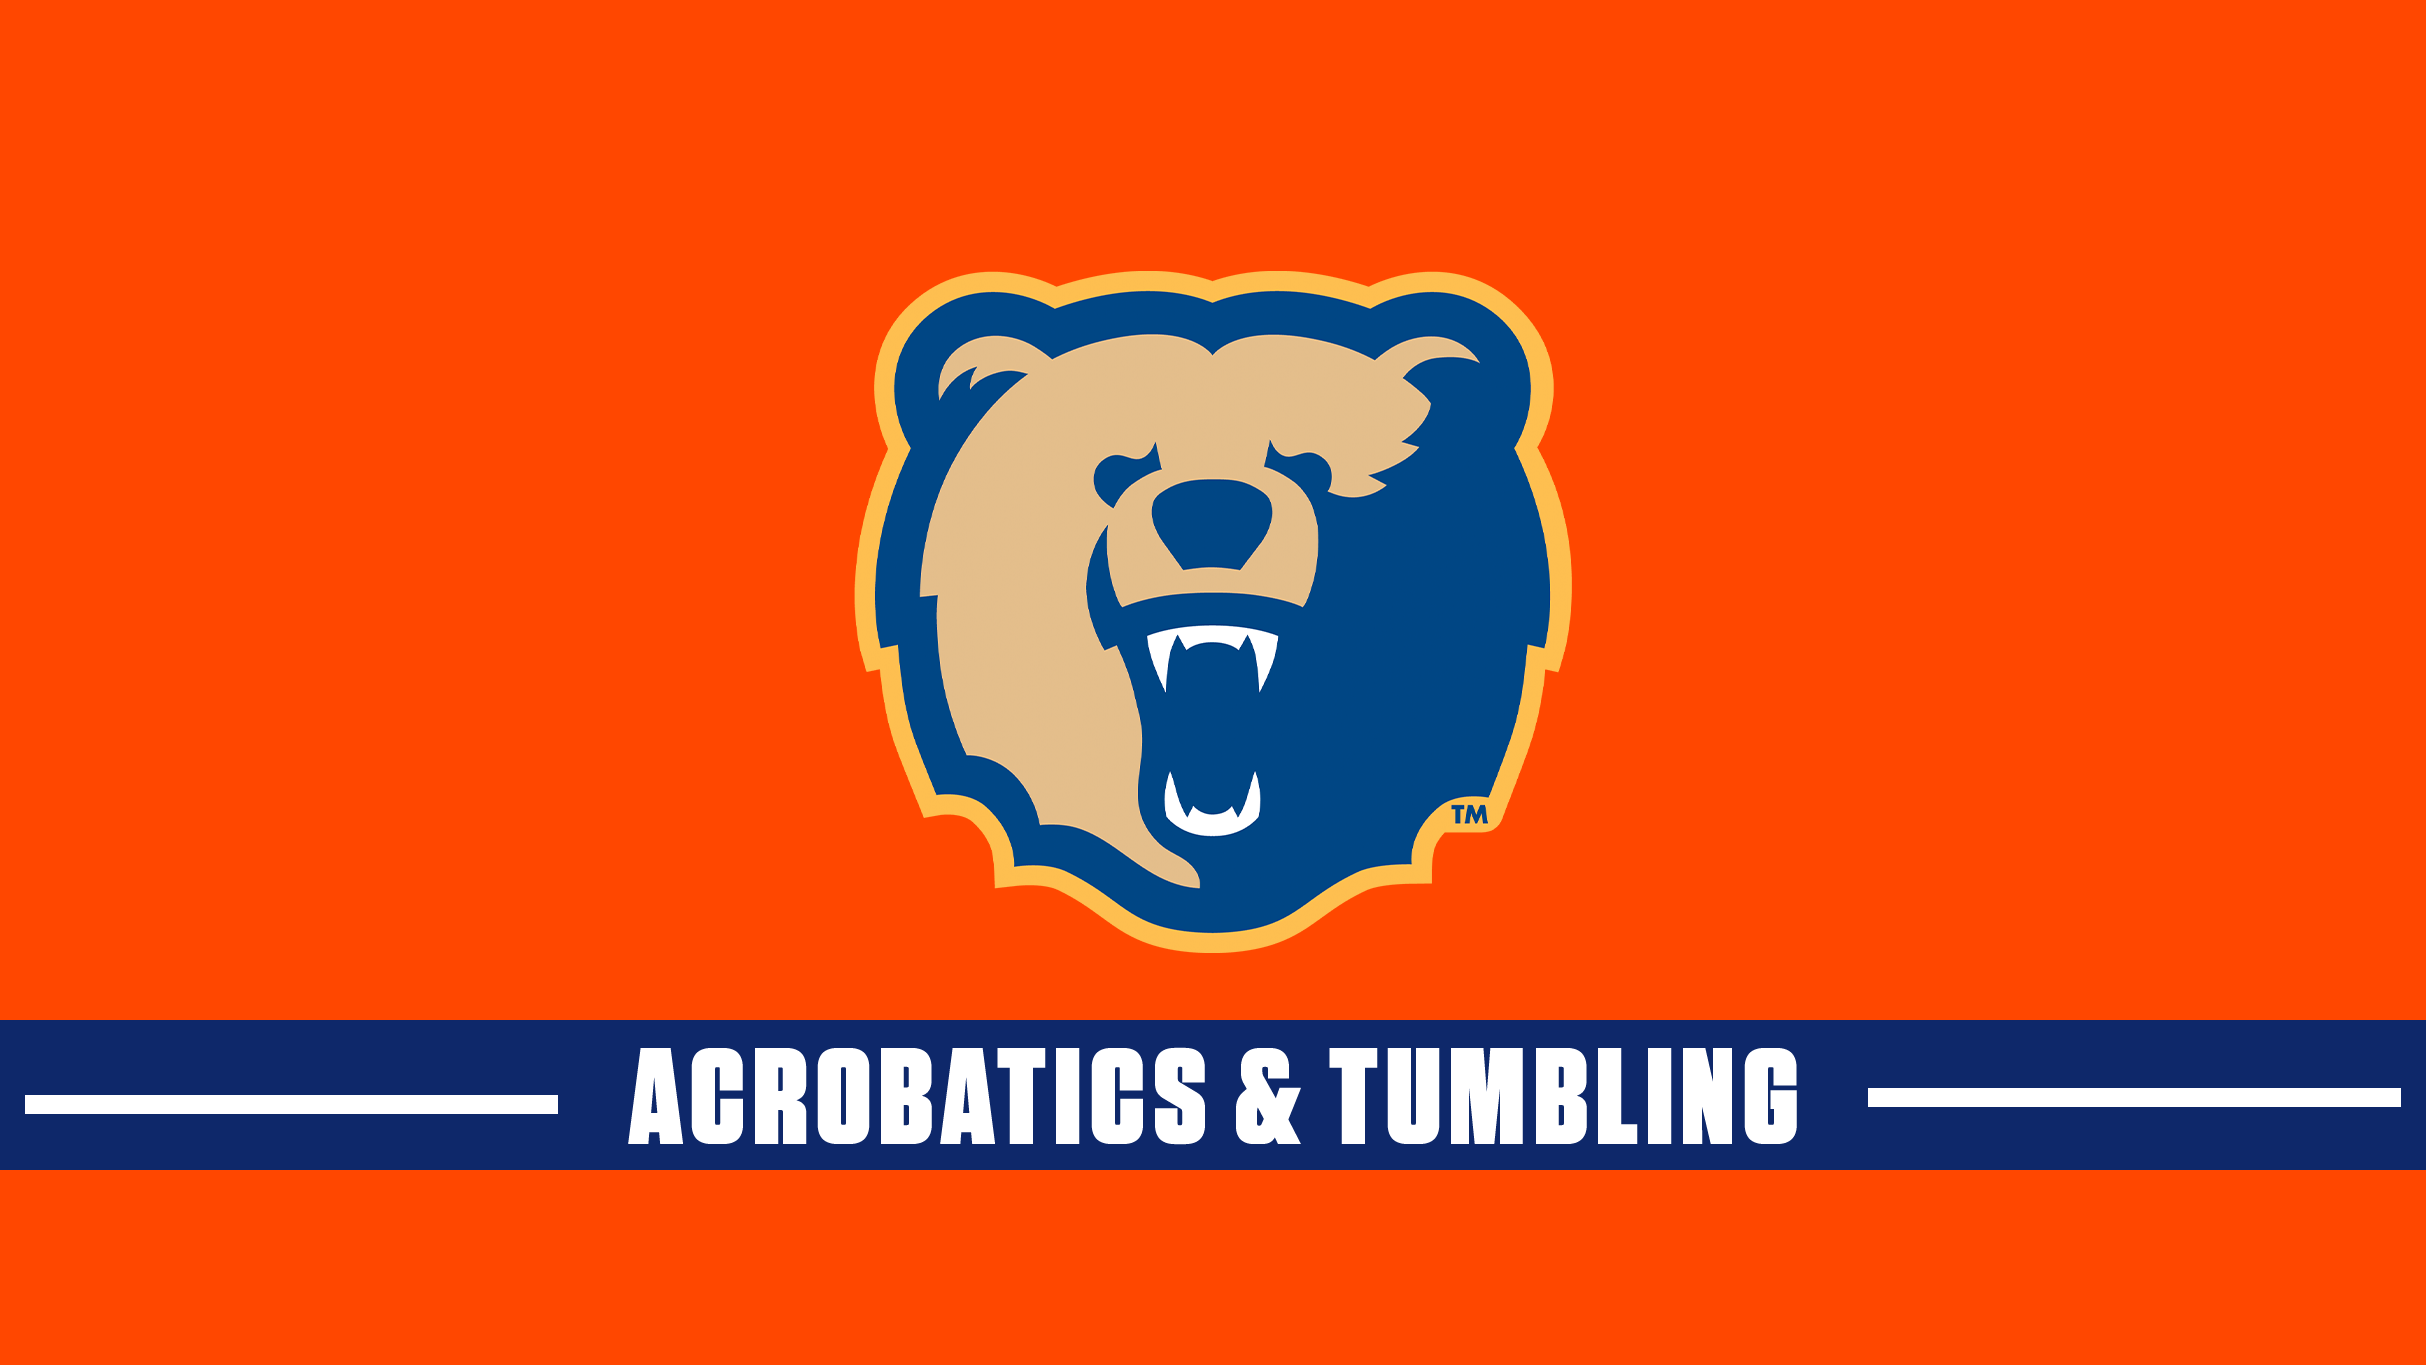 Morgan State University Acrobatics and Tumbling